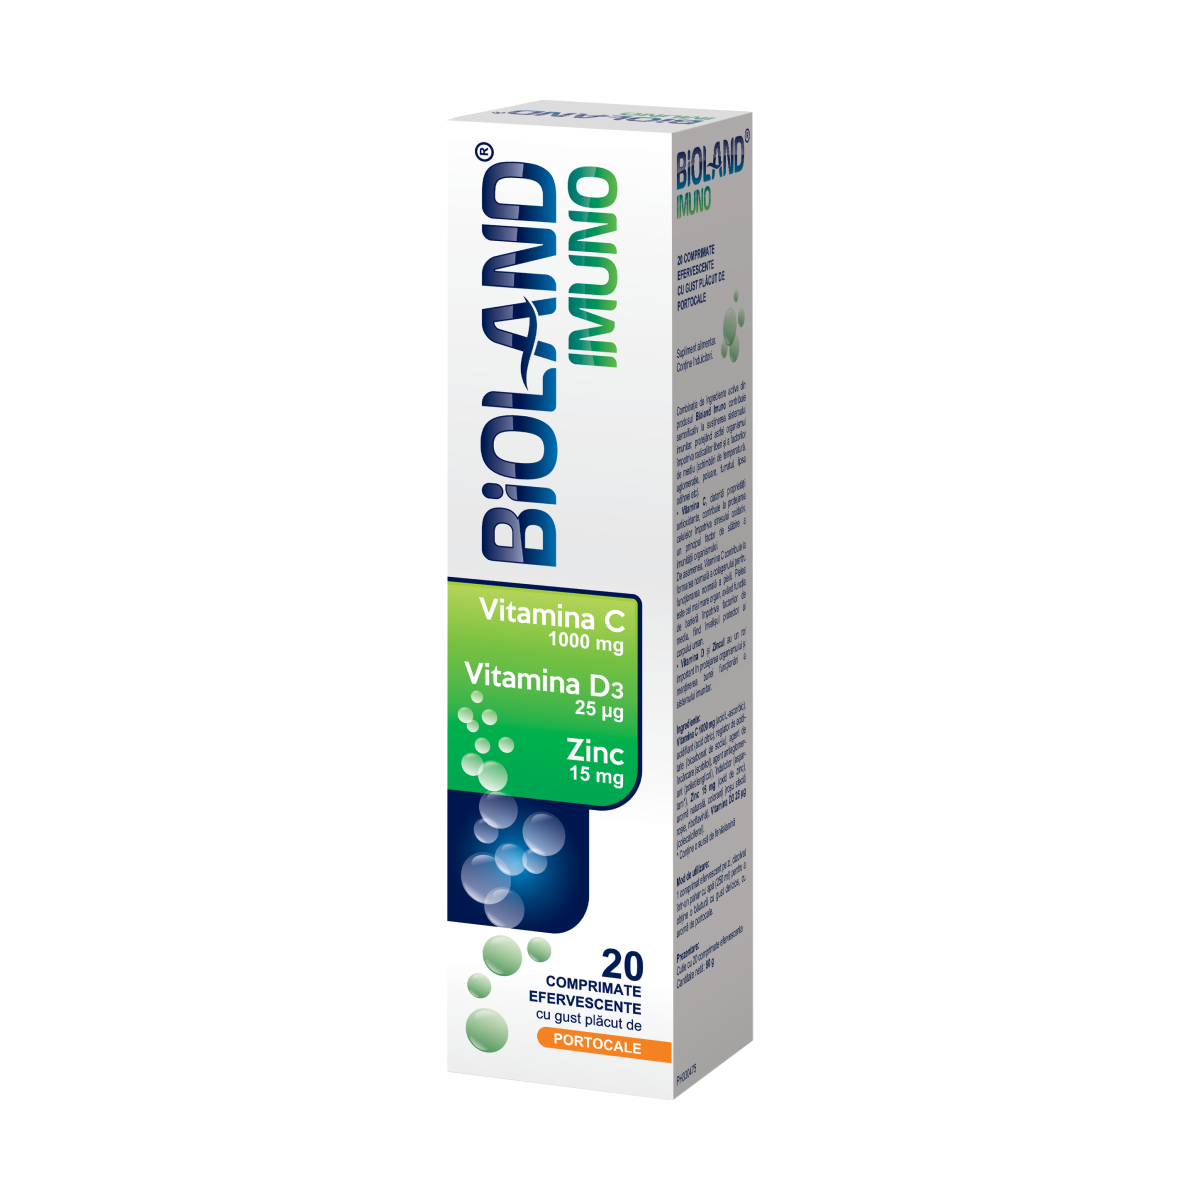 Bioland Imuno, 20 comprimate efervescente, Biofarm